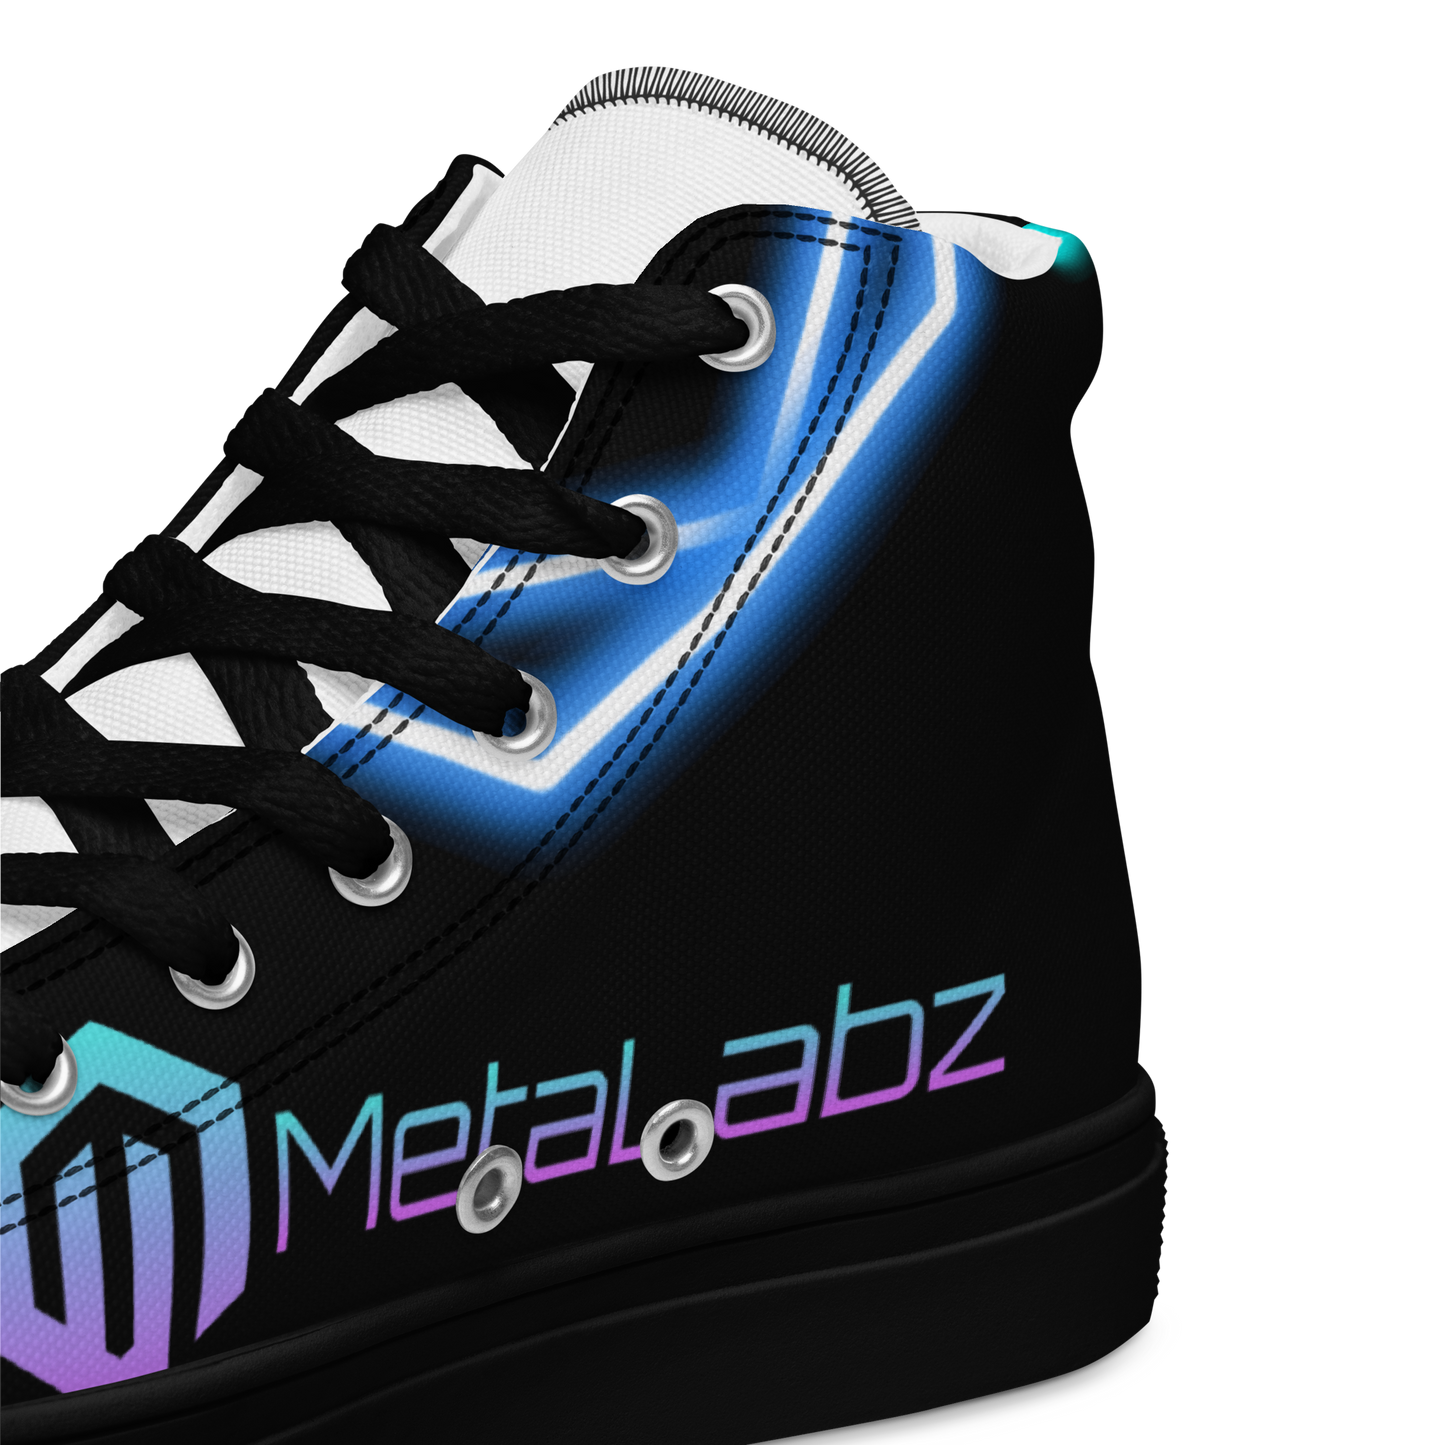 MetaLabz Men’s high top canvas shoes